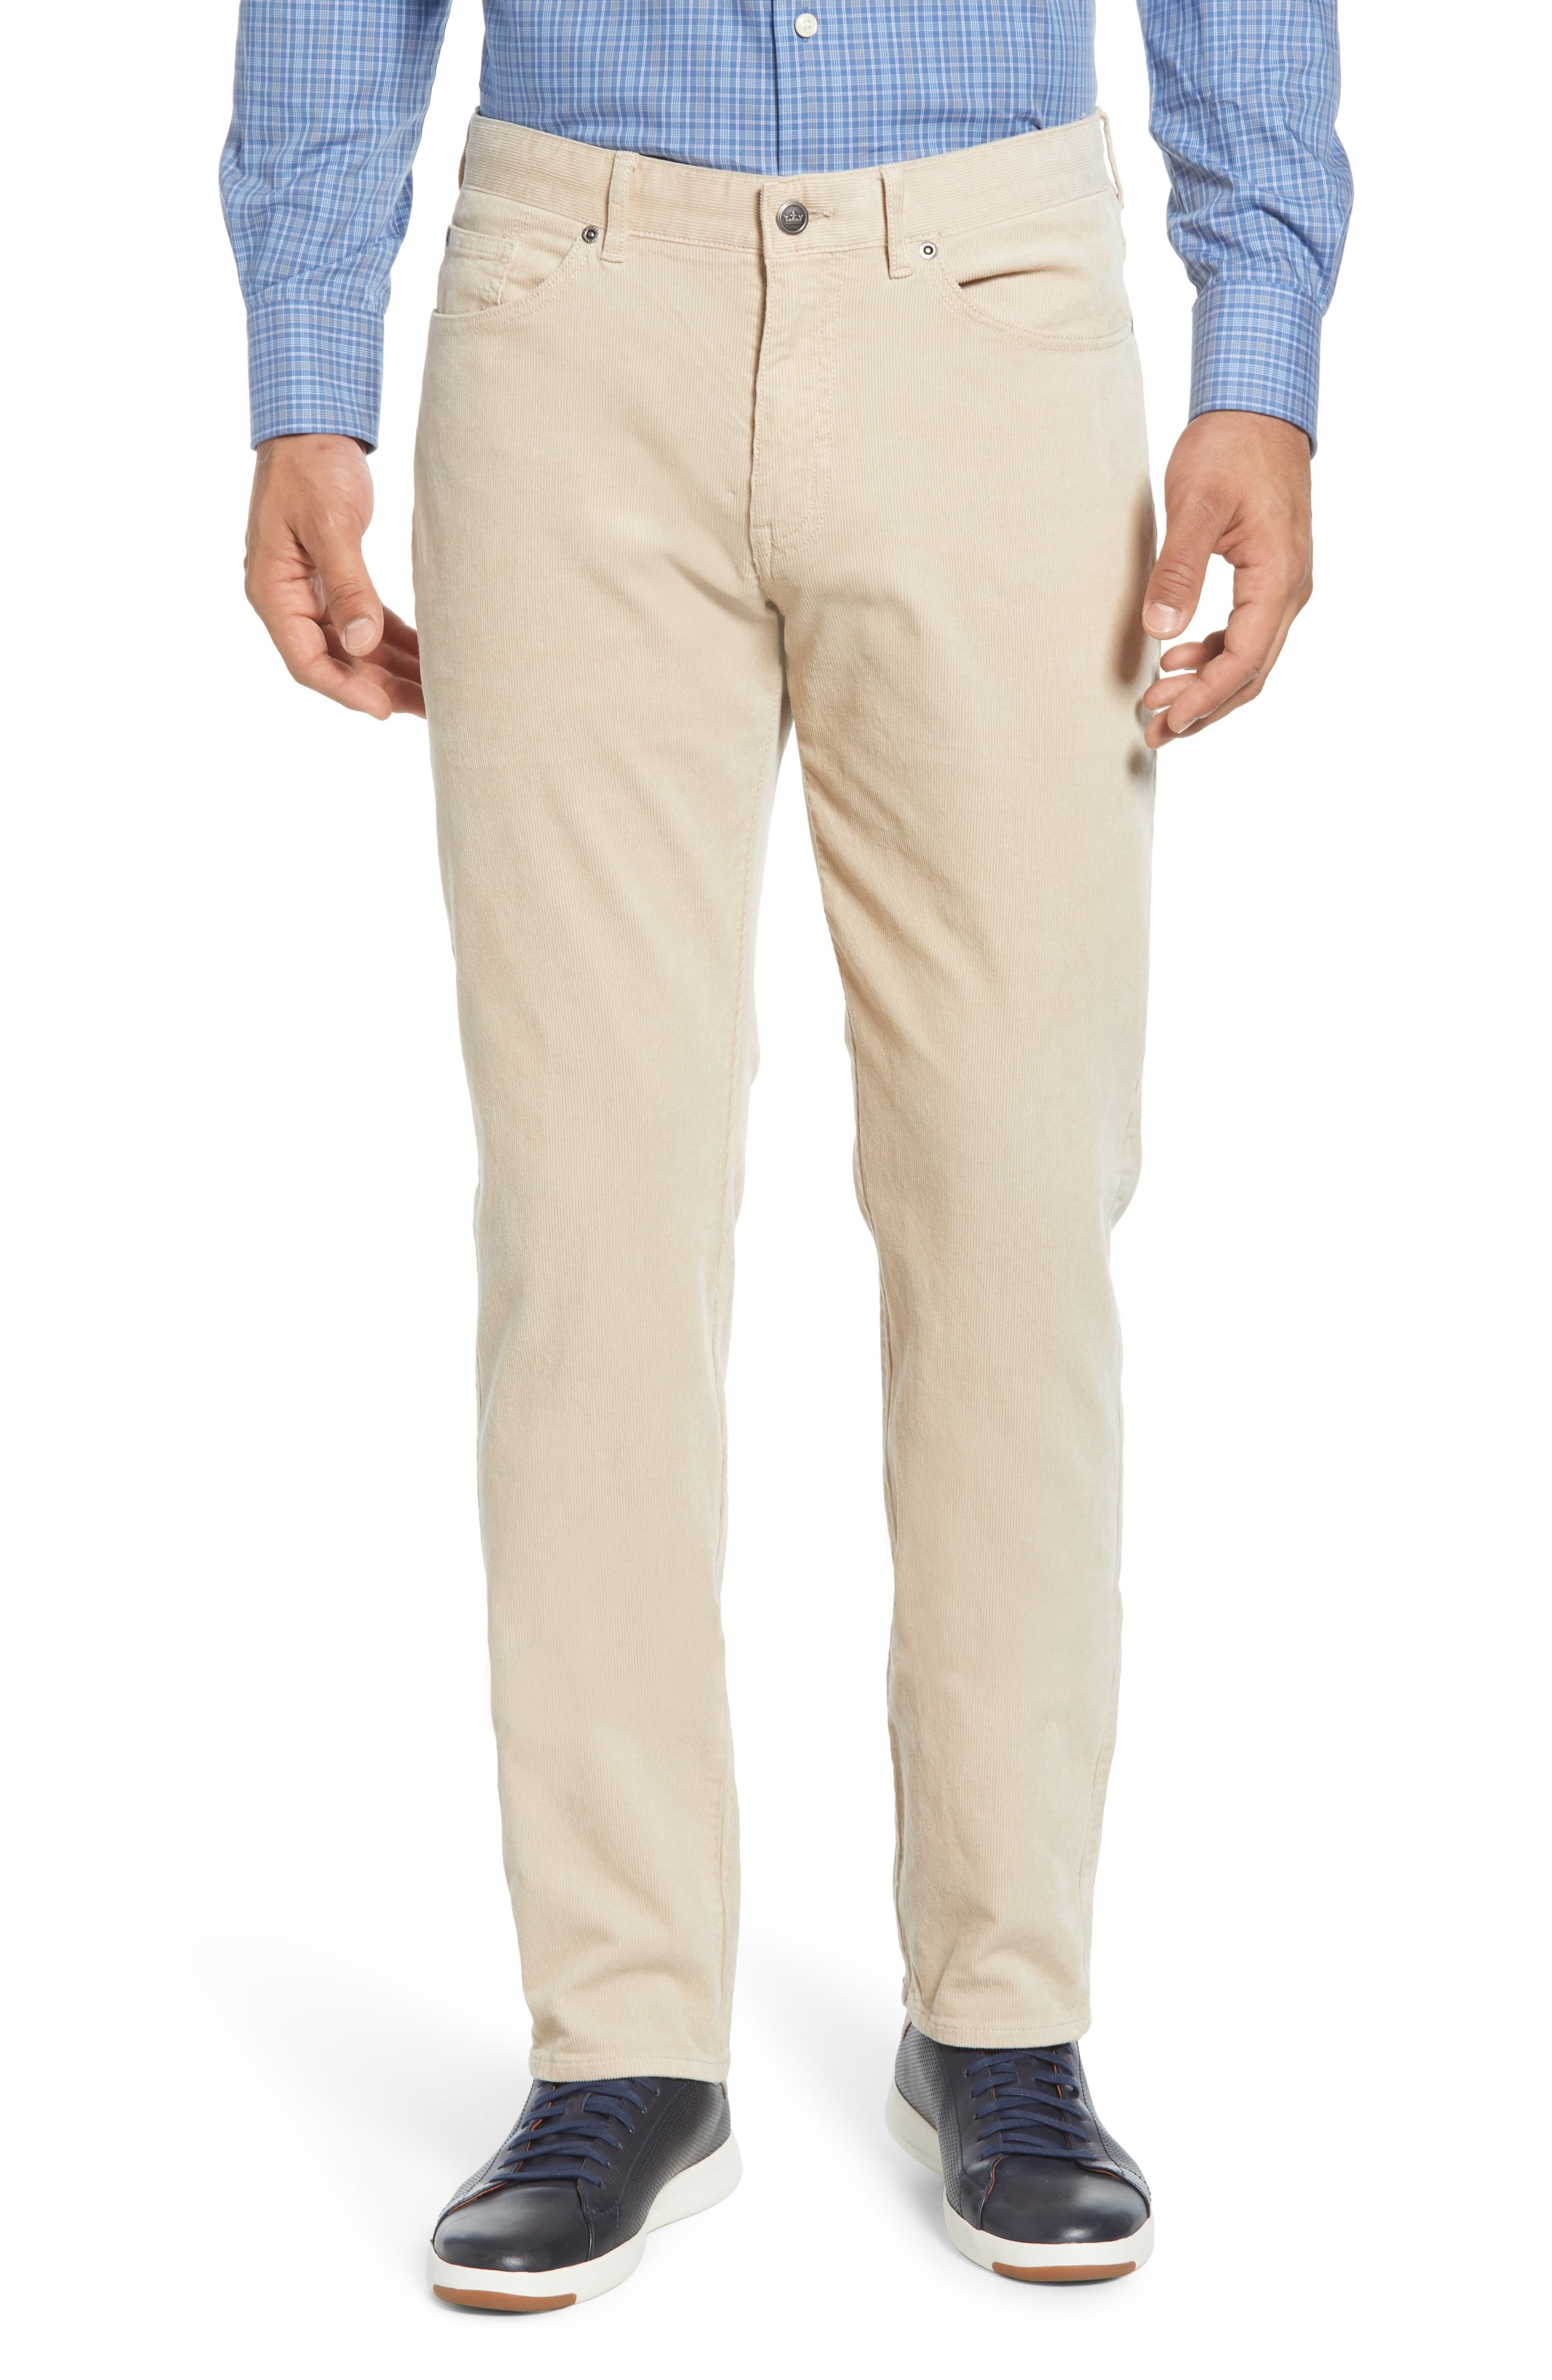 Peter Millar Superior Soft Five Pocket Corduroy Pants, $149